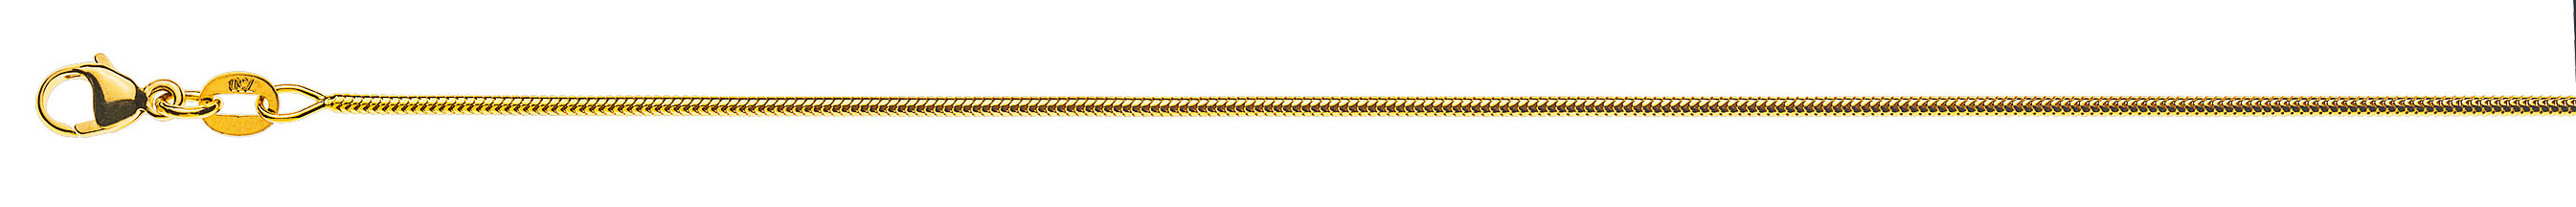 AURONOS Prestige Necklace yellow gold 18K snake chain 60cm 1.2mm